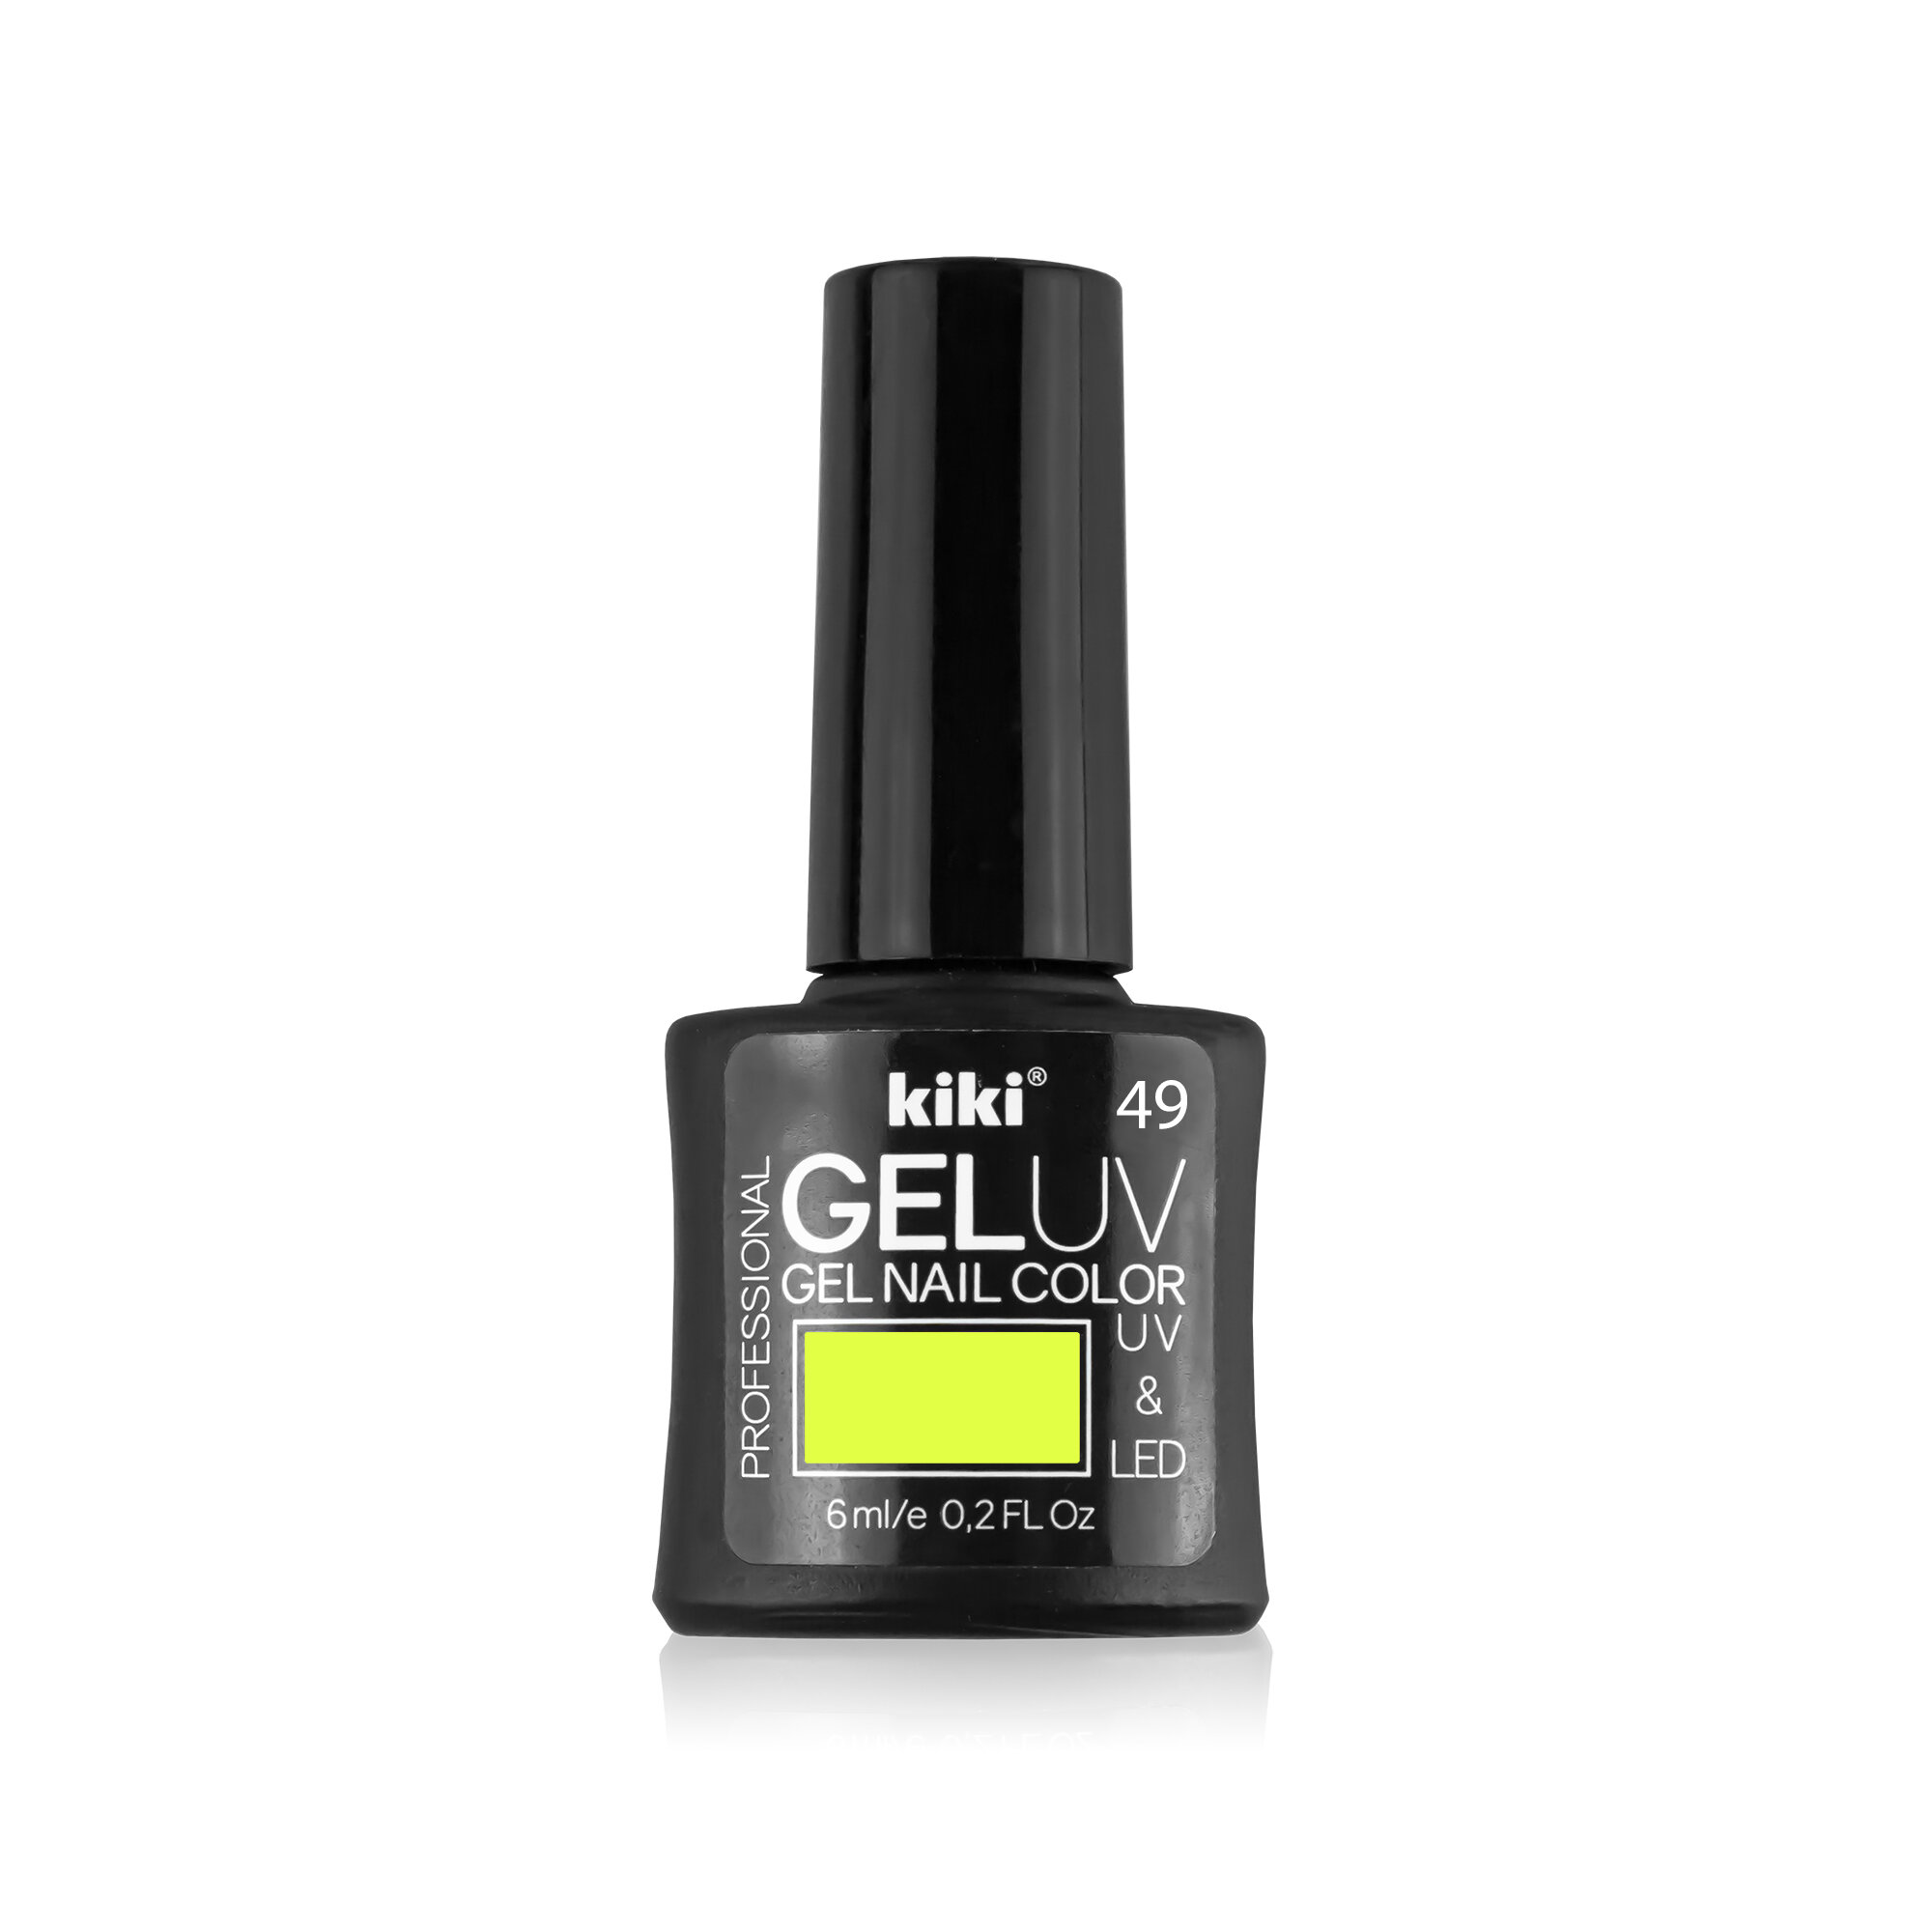 Гель-лак для ногтей KIKI оттенок 49 GEL UV&LED, кислотно-желтый, 6 мл